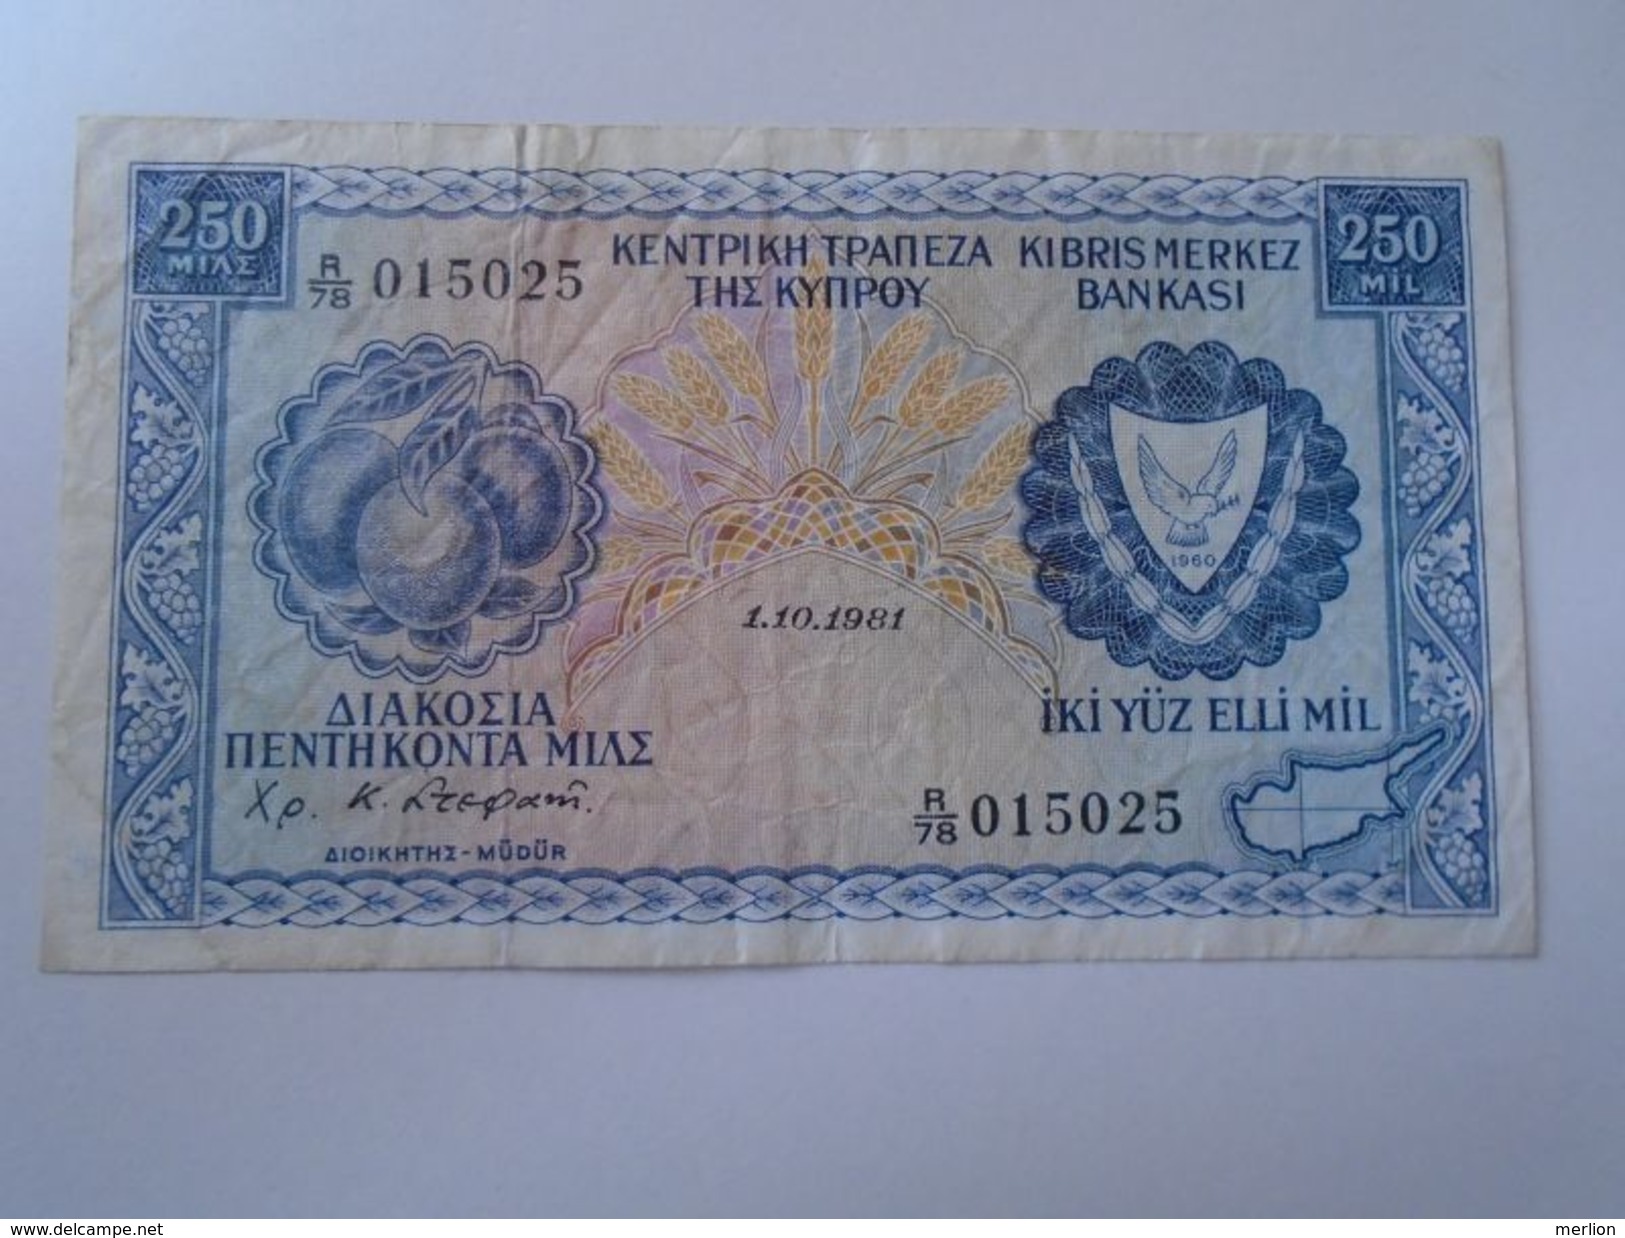 DEL001.13  Cyprus 250 Mils 1981 In (F) Condition Banknote P-41c - Chypre